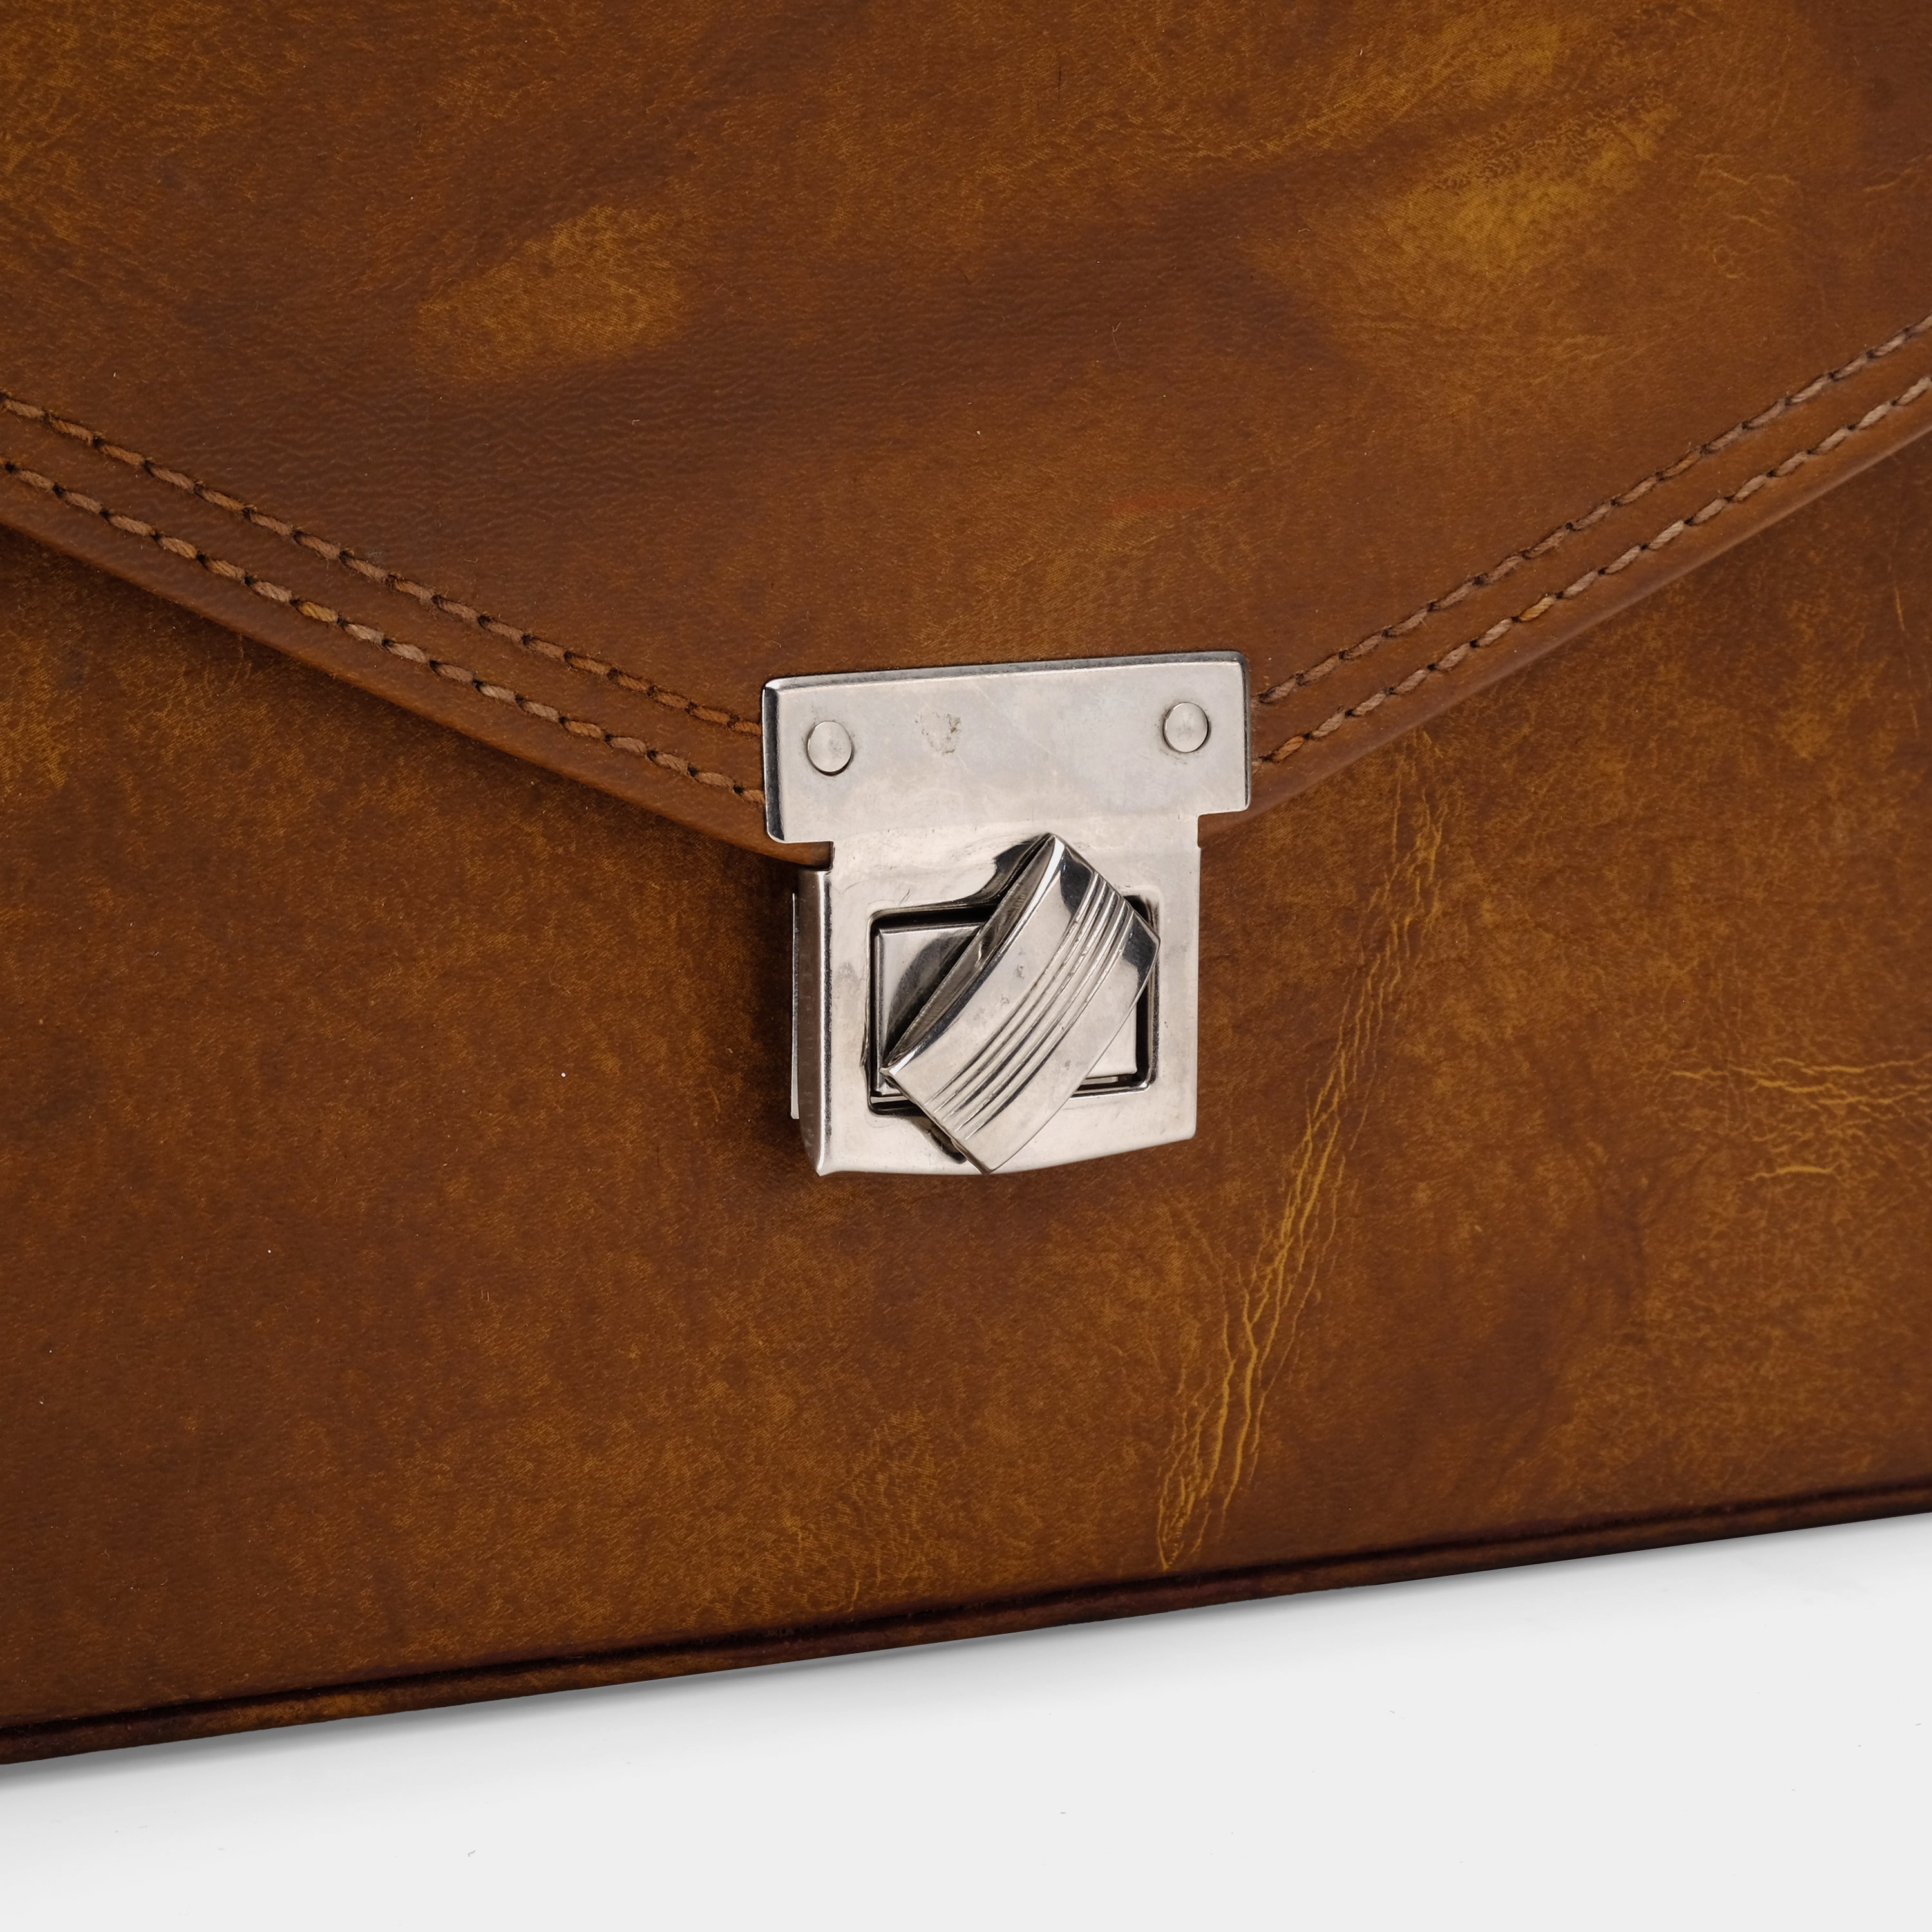 Polaroid Leather Folding Instant Camera Case (B-Grade)